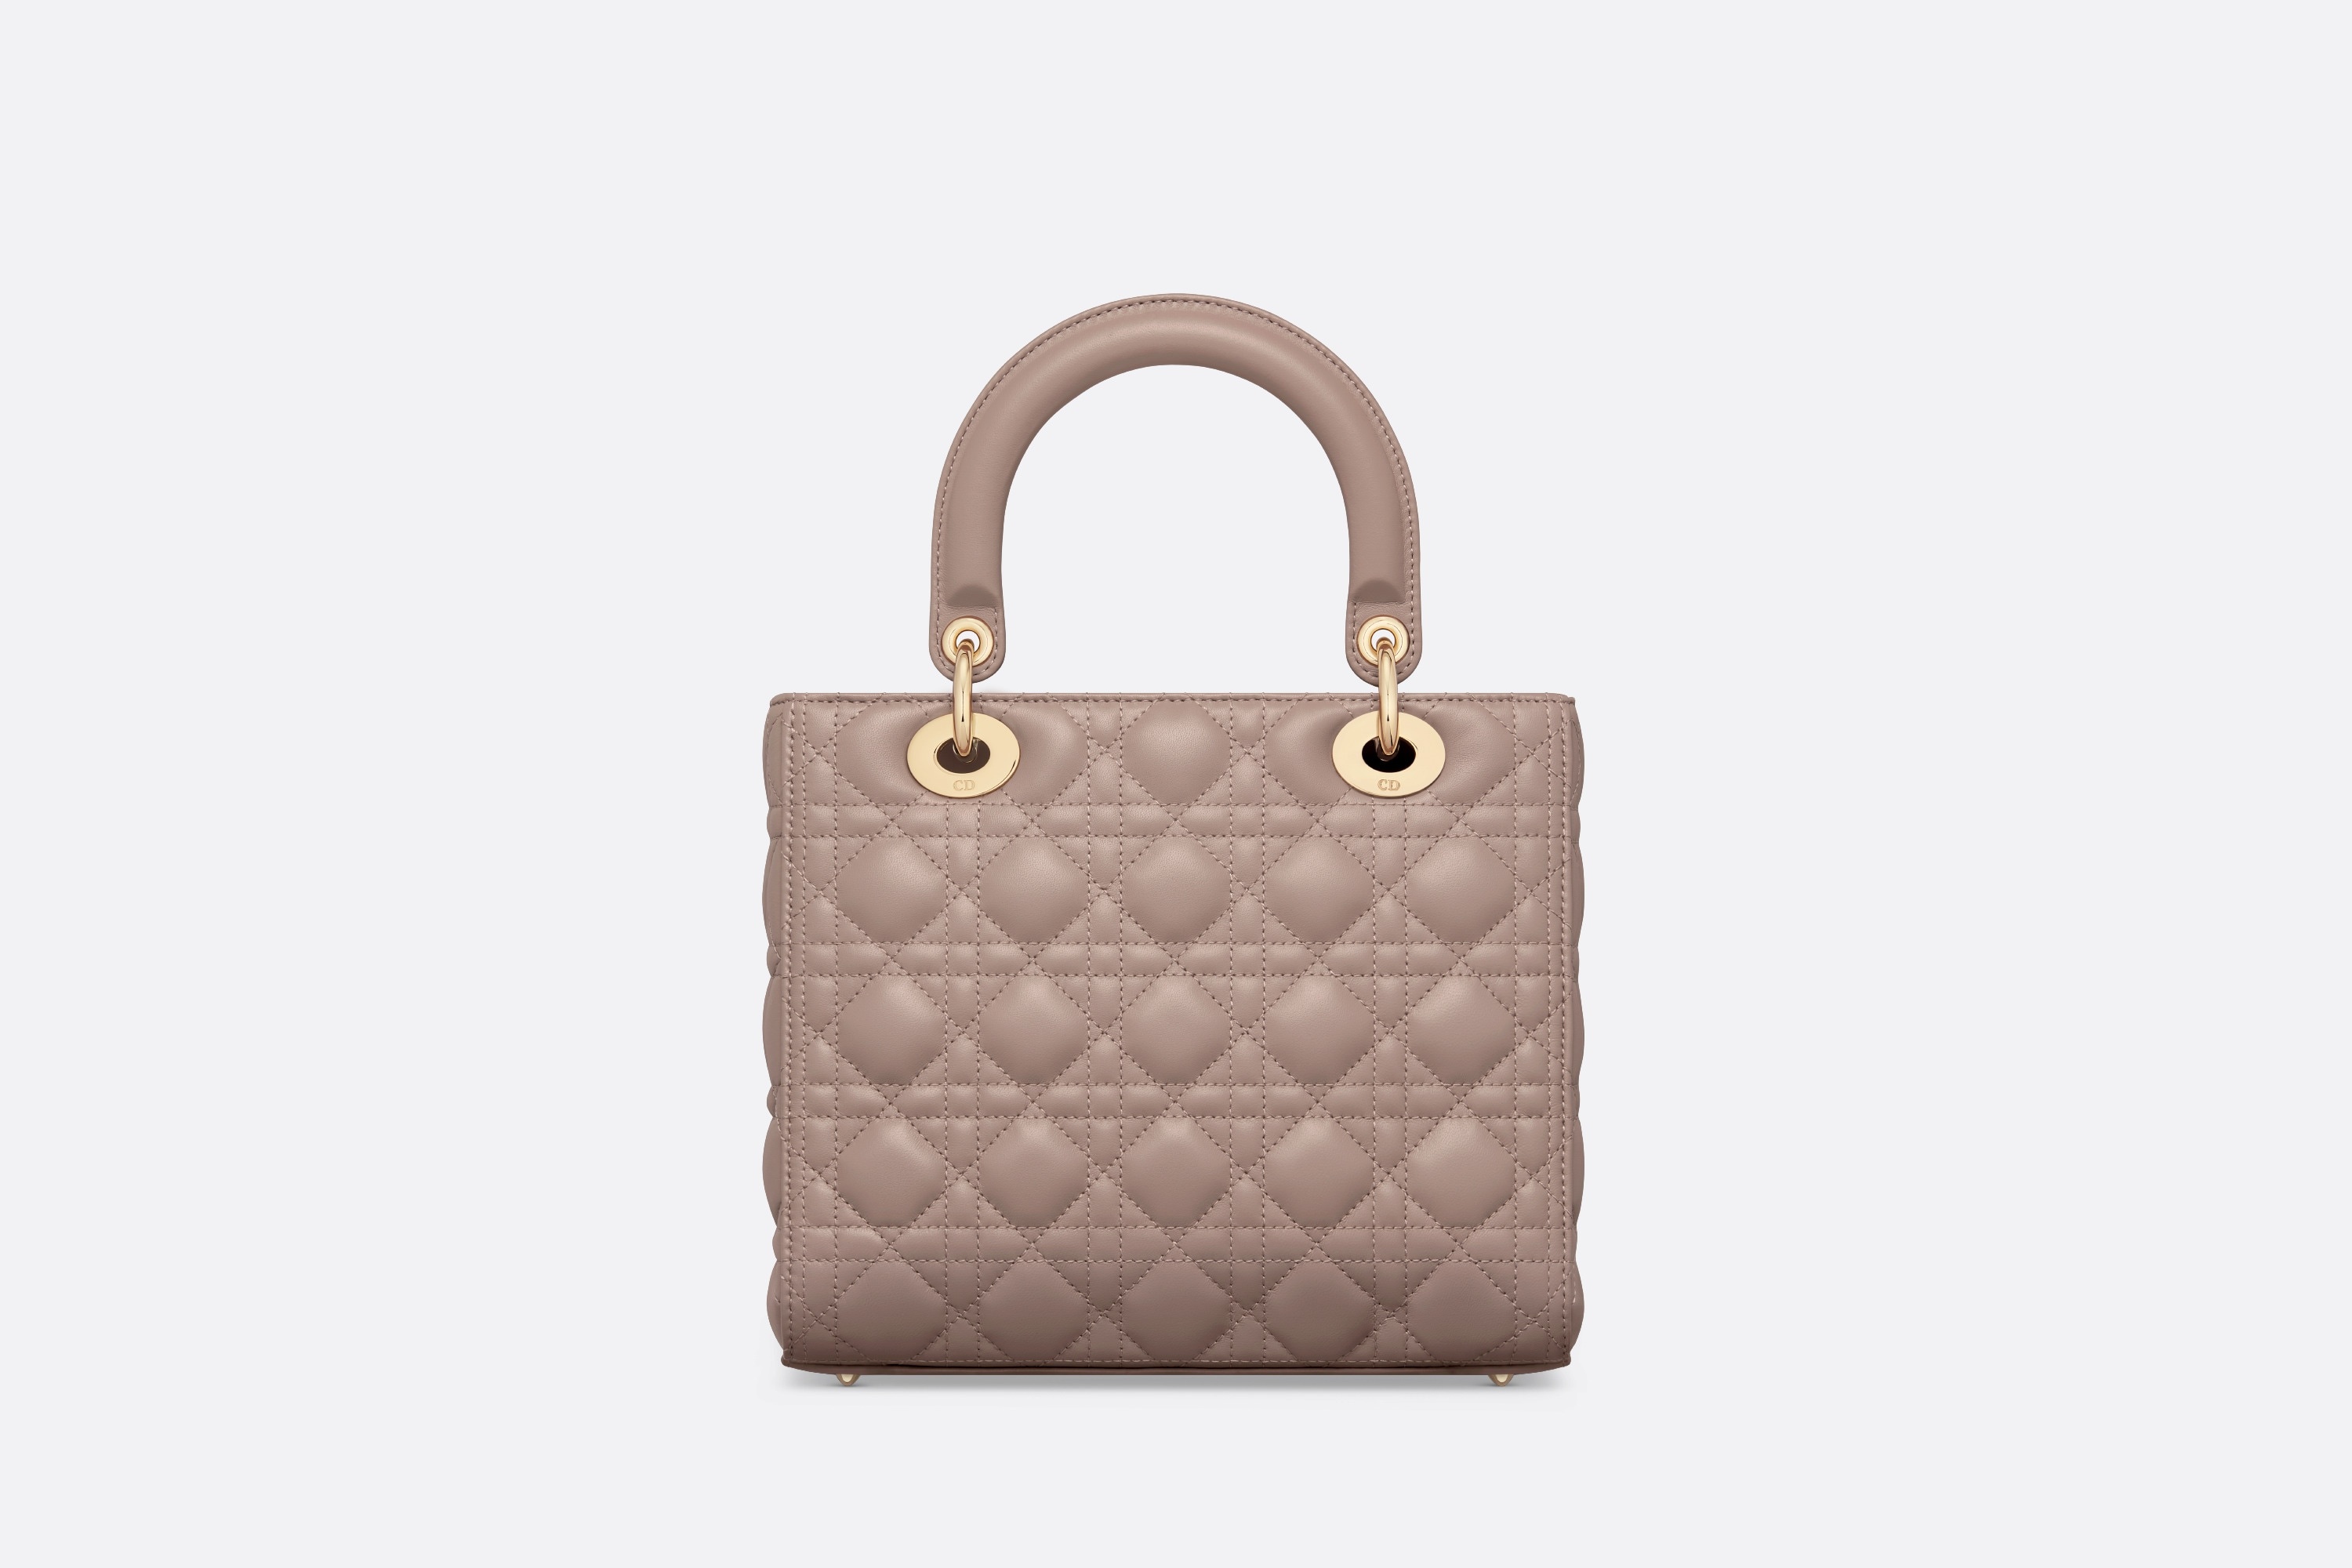 Medium Lady Dior Bag - 2